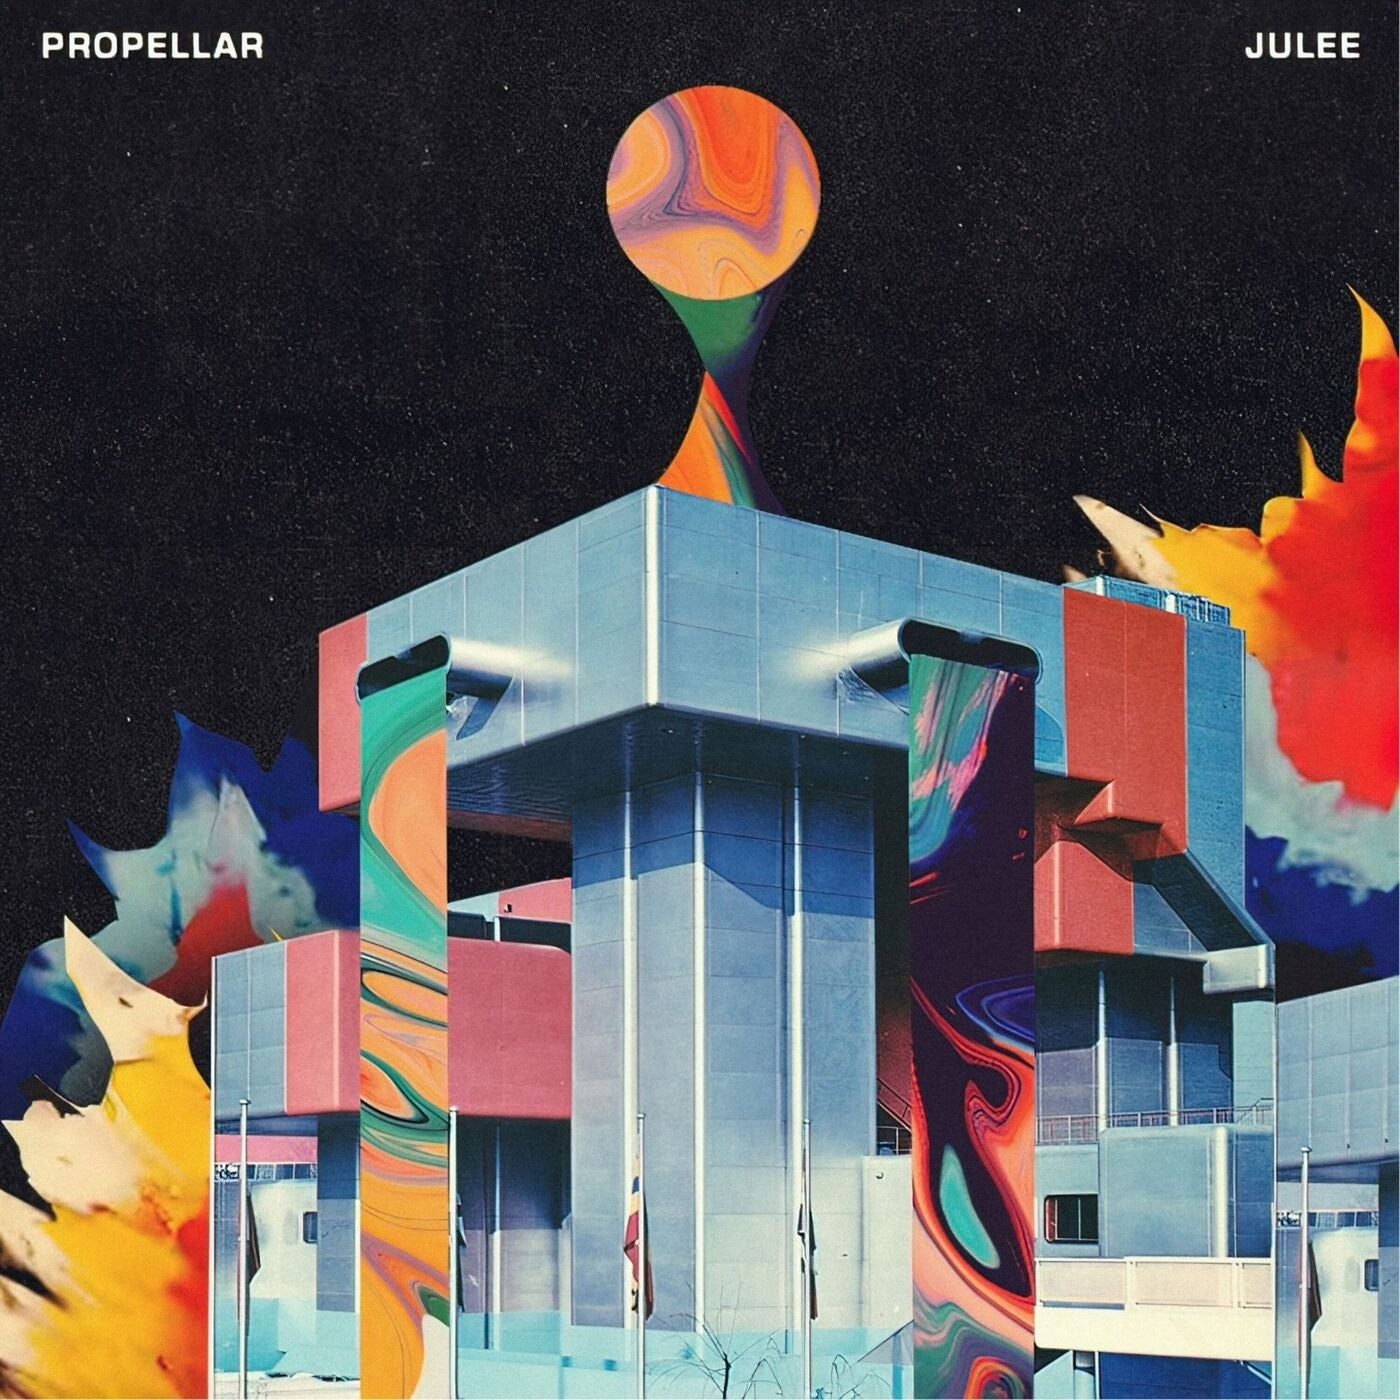 Propellar - Julee feat. Kalaa (Original Mix)